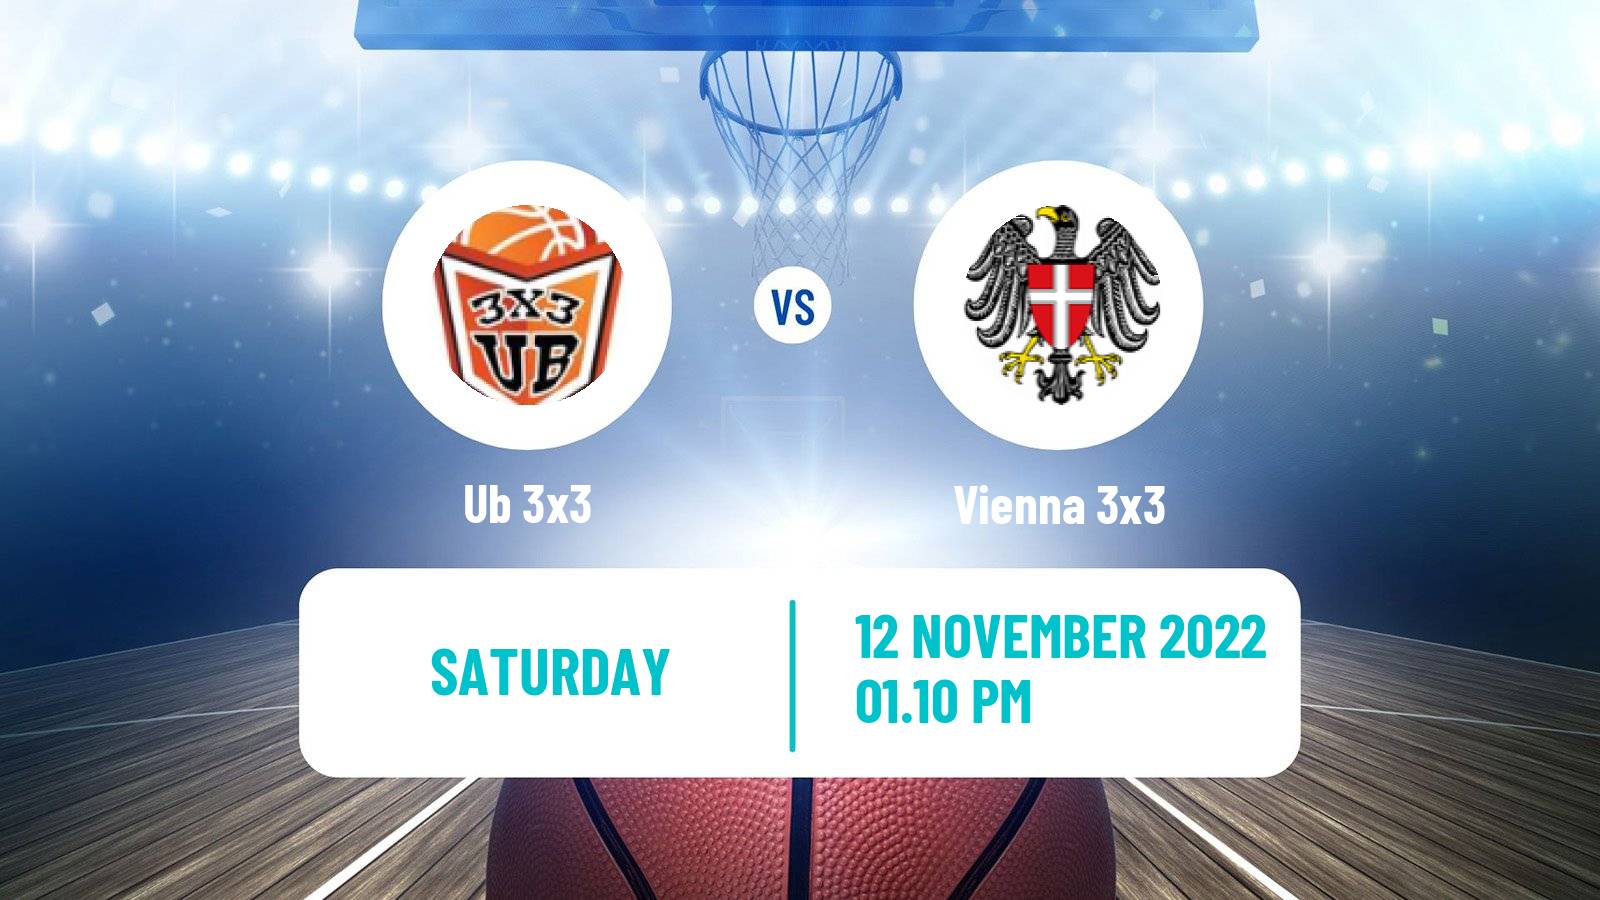 Basketball World Tour Riyadh 3x3 Ub 3x3 - Vienna 3x3